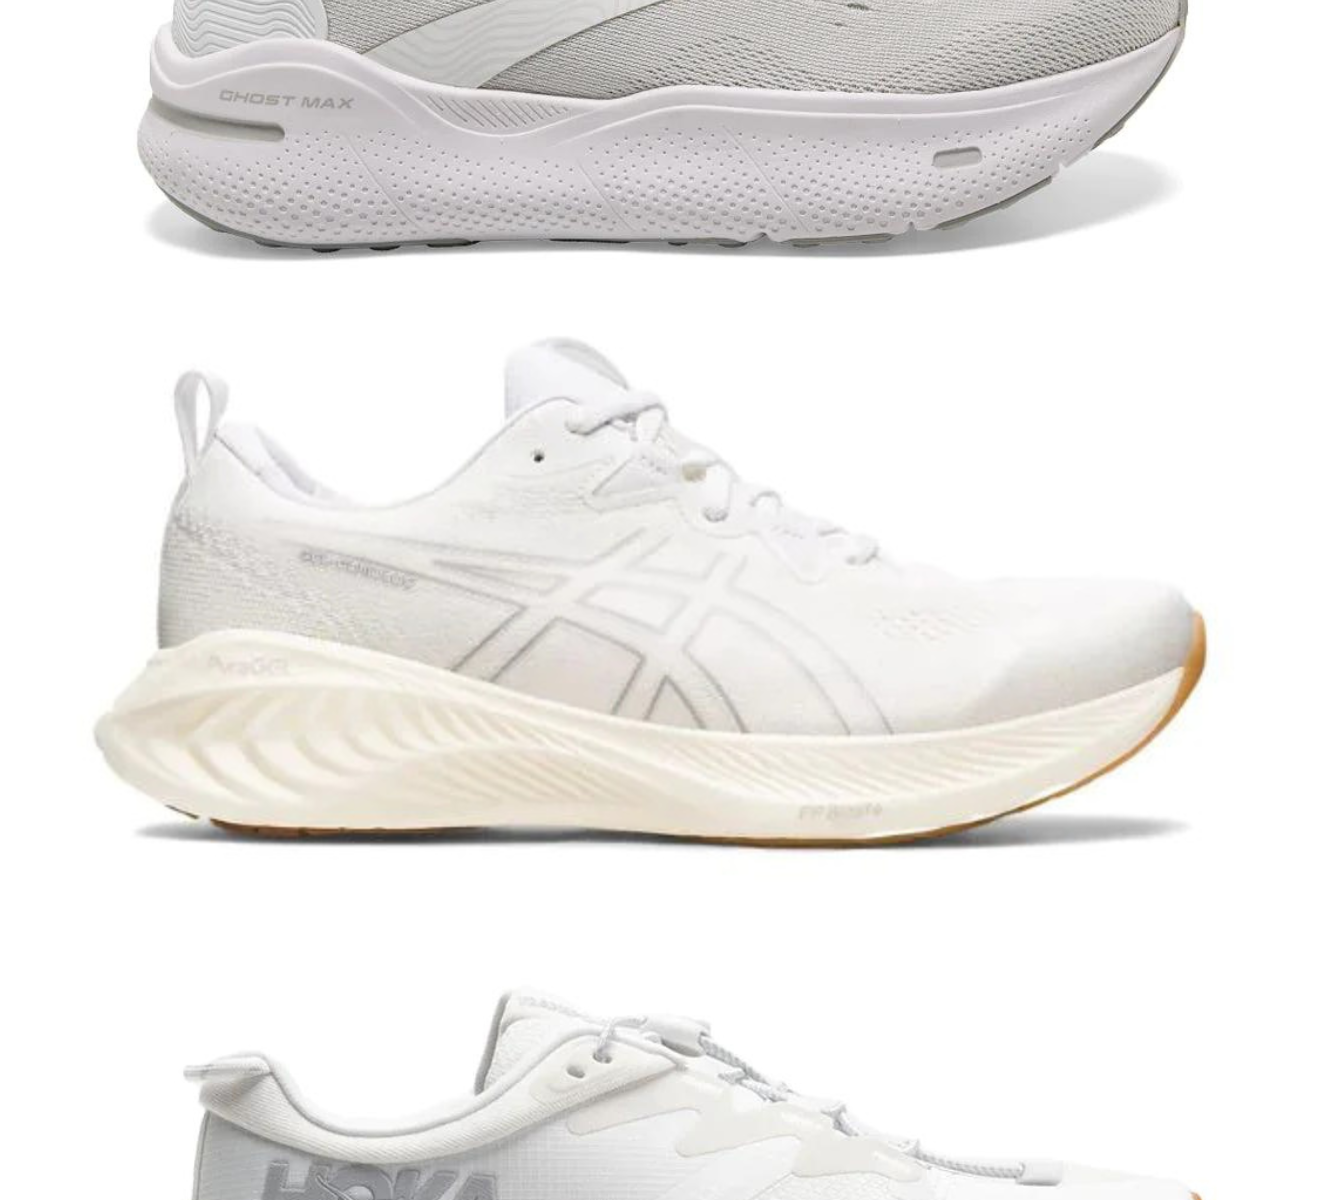 All-White Running Shoe Options for both Men and Women